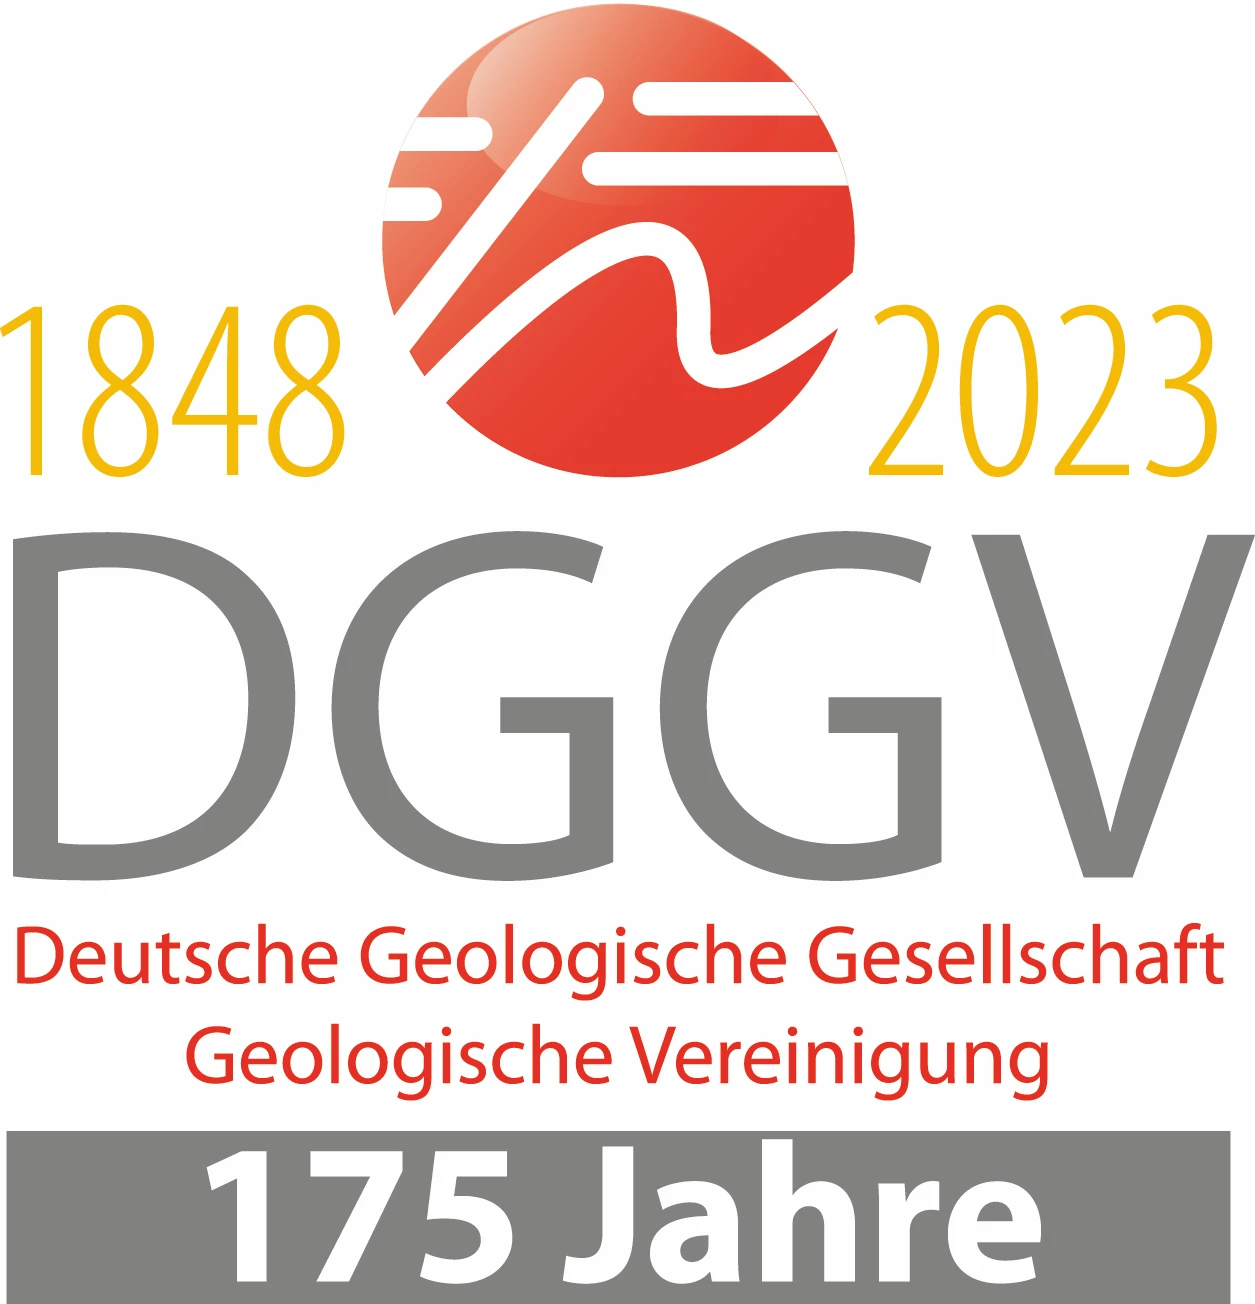 Deutsche Geologische Gesellschaft - Geologische Vereinigung e.V.